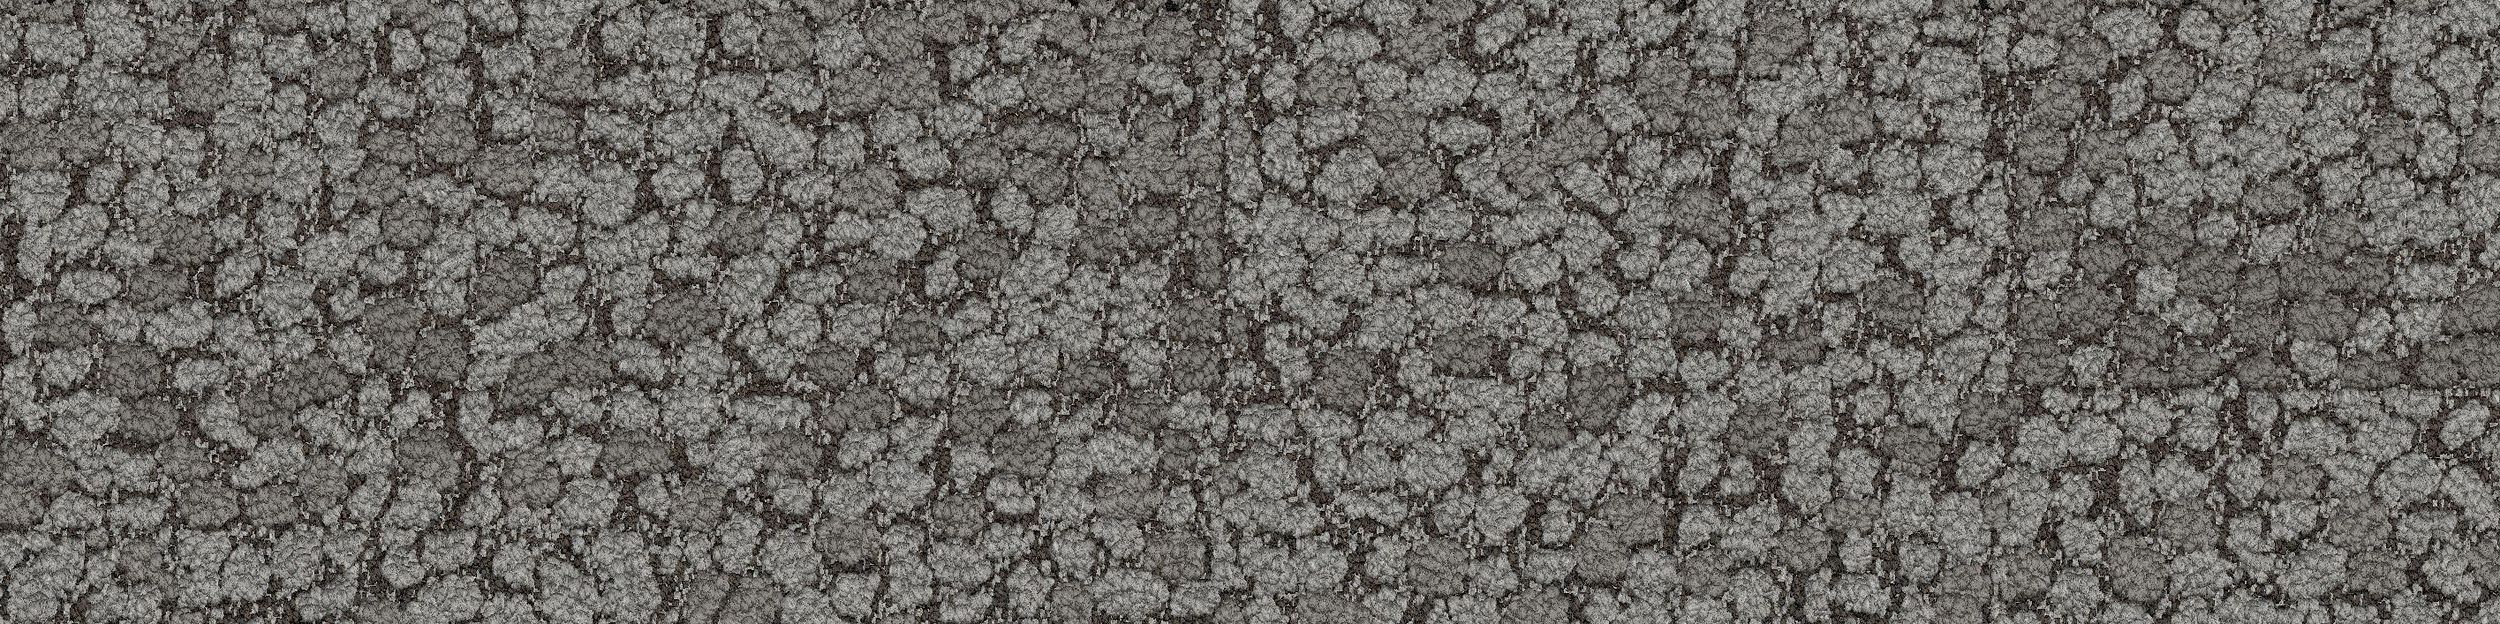 HN840 Carpet Tile In Nickel imagen número 2